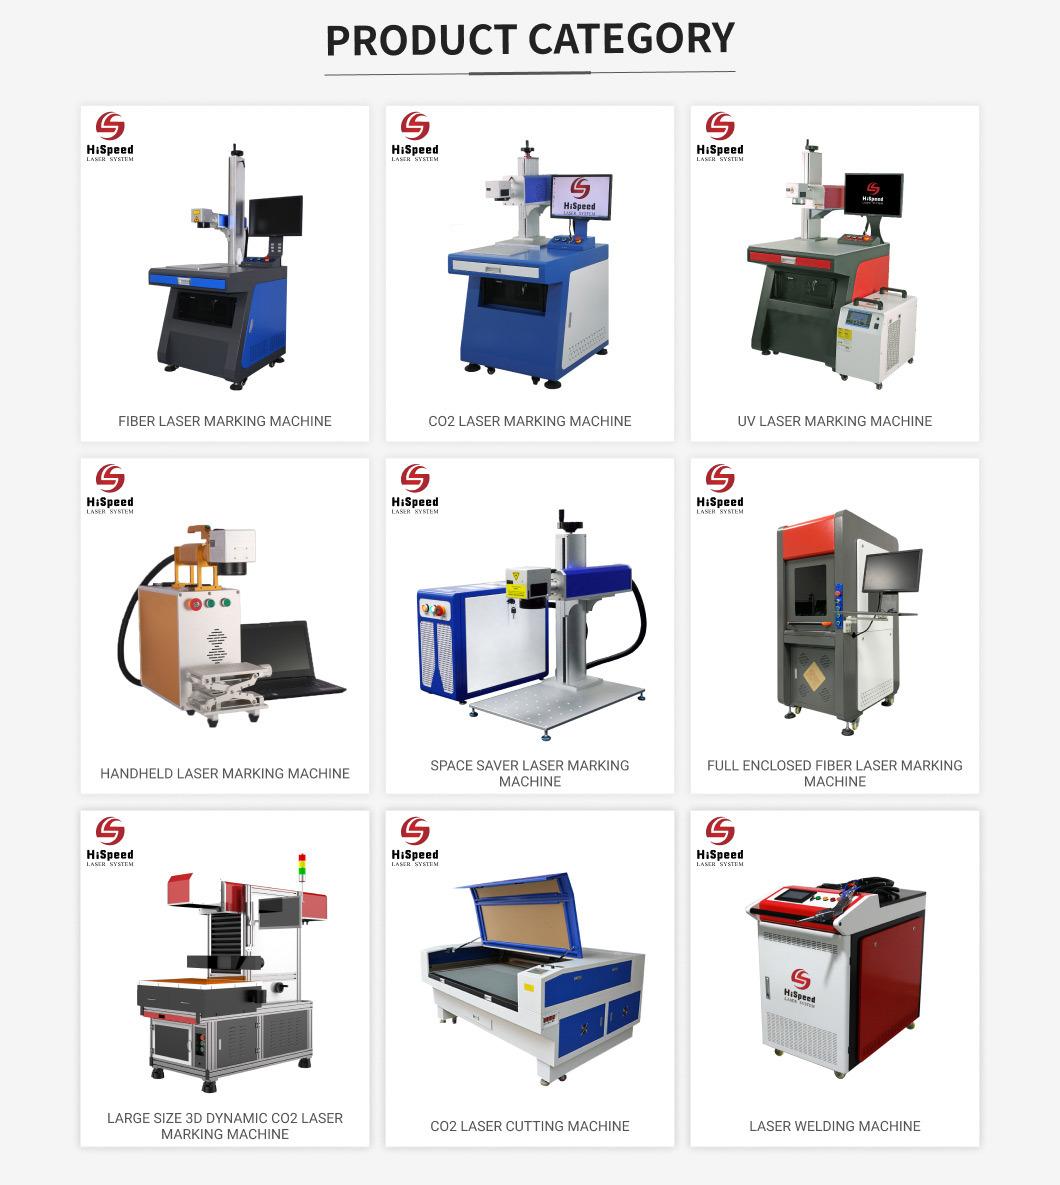 Distributor Price 1390 100W Wood Acrylic Plywood CO2 Laser Cutting Engraving Machine